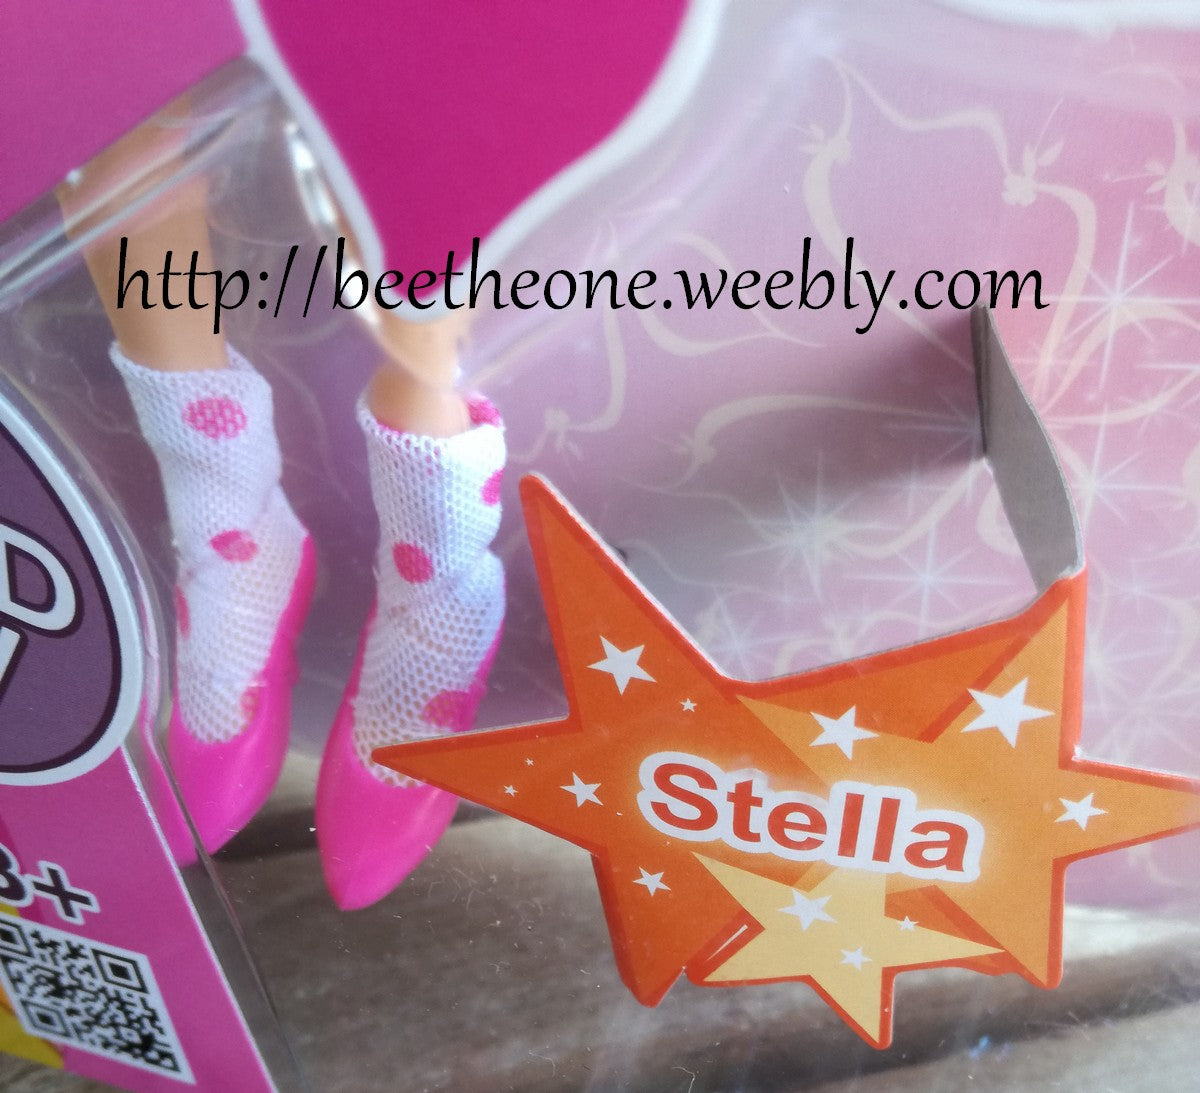 Poupée Winx Club Stella City Girl - Witty Toys - 2016 - Exclusivité Chine